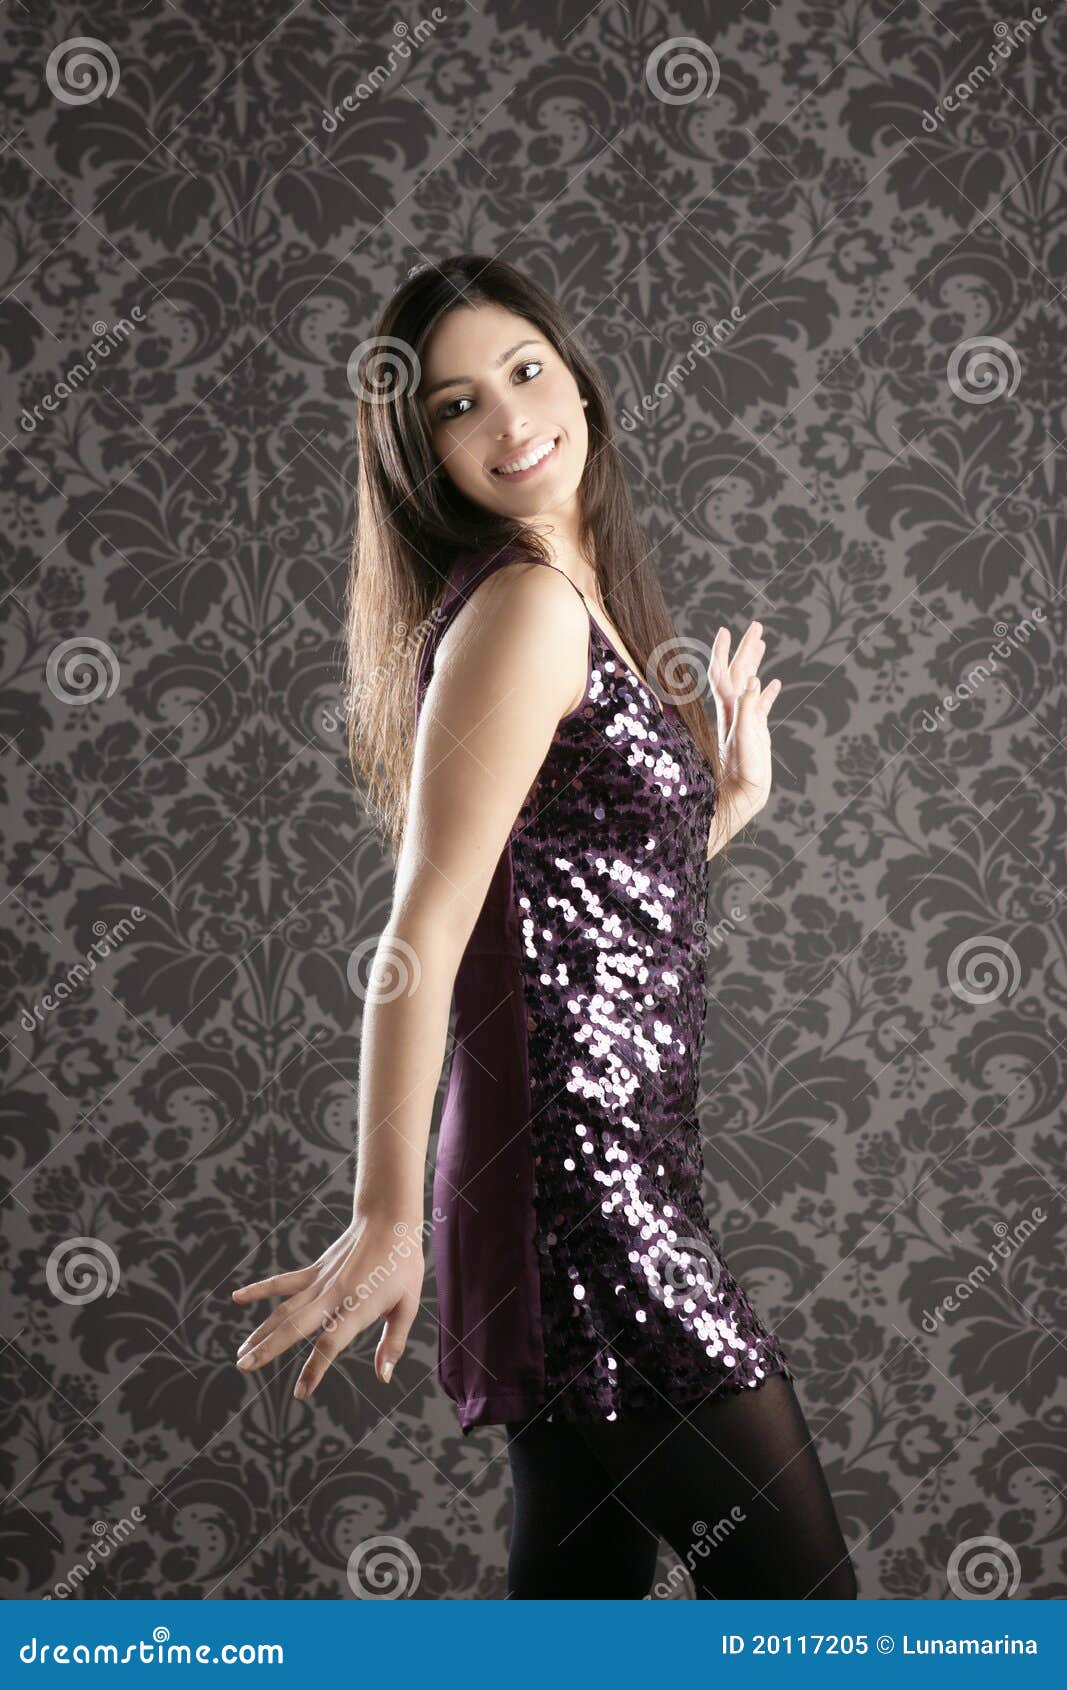 Elegant Fashion Woman Sequins Dress Wallpaper Stock Image photo pic